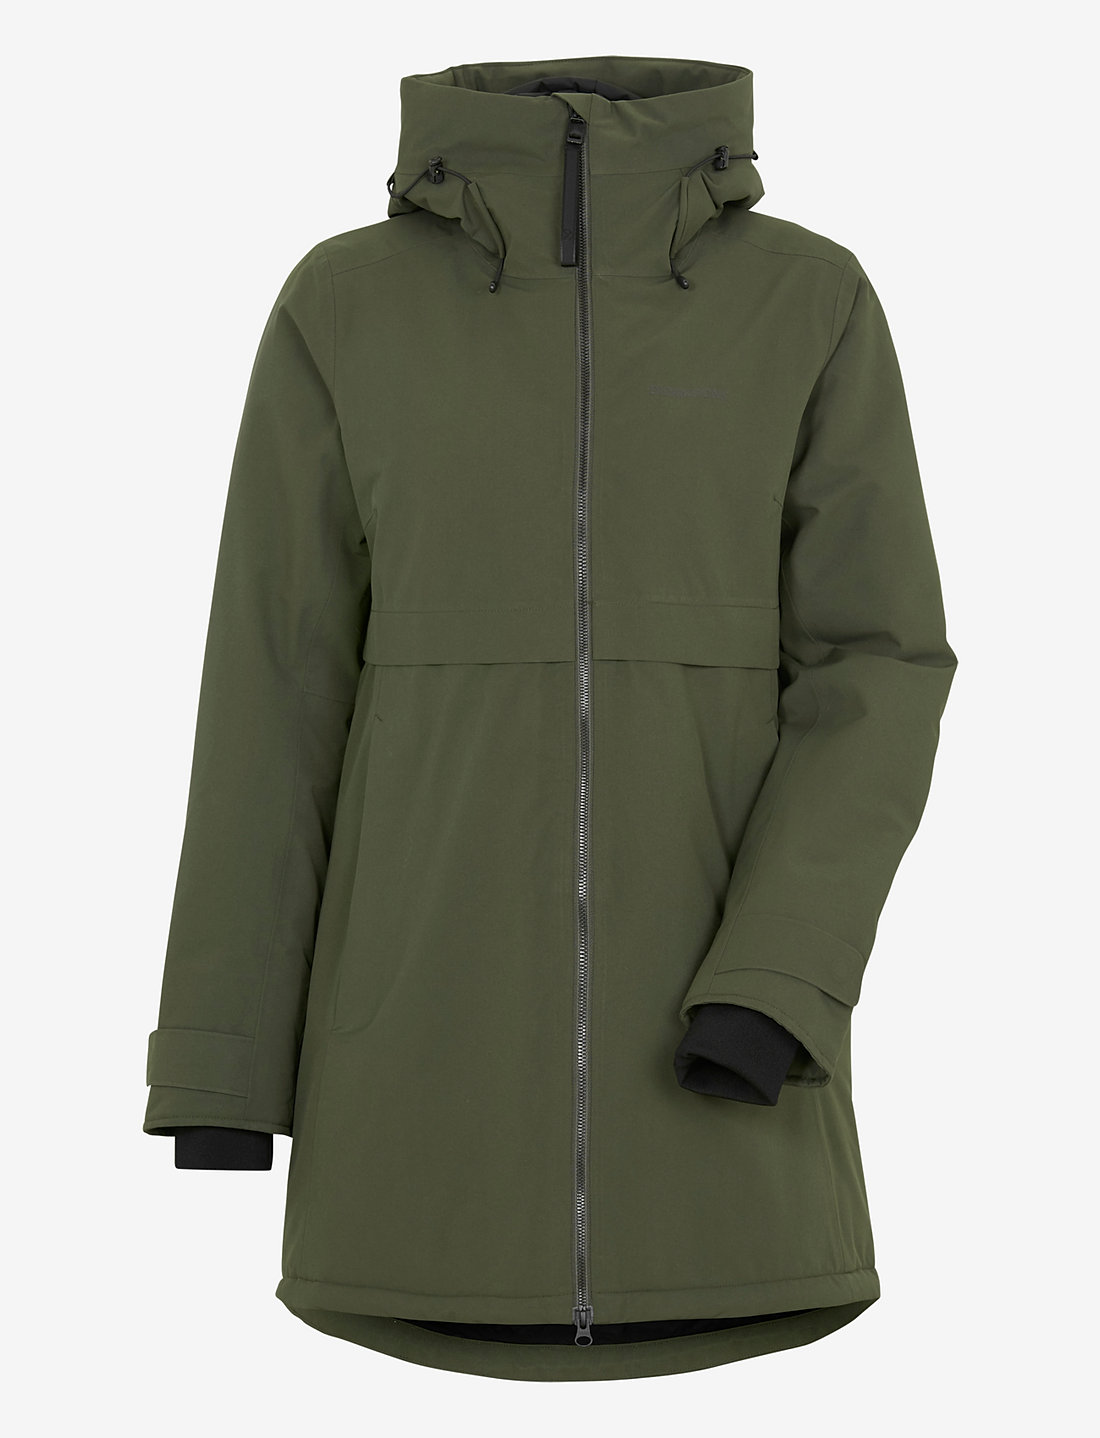 Didriksons Helle Wns Parka 5 – jackets & coats – shop at Booztlet